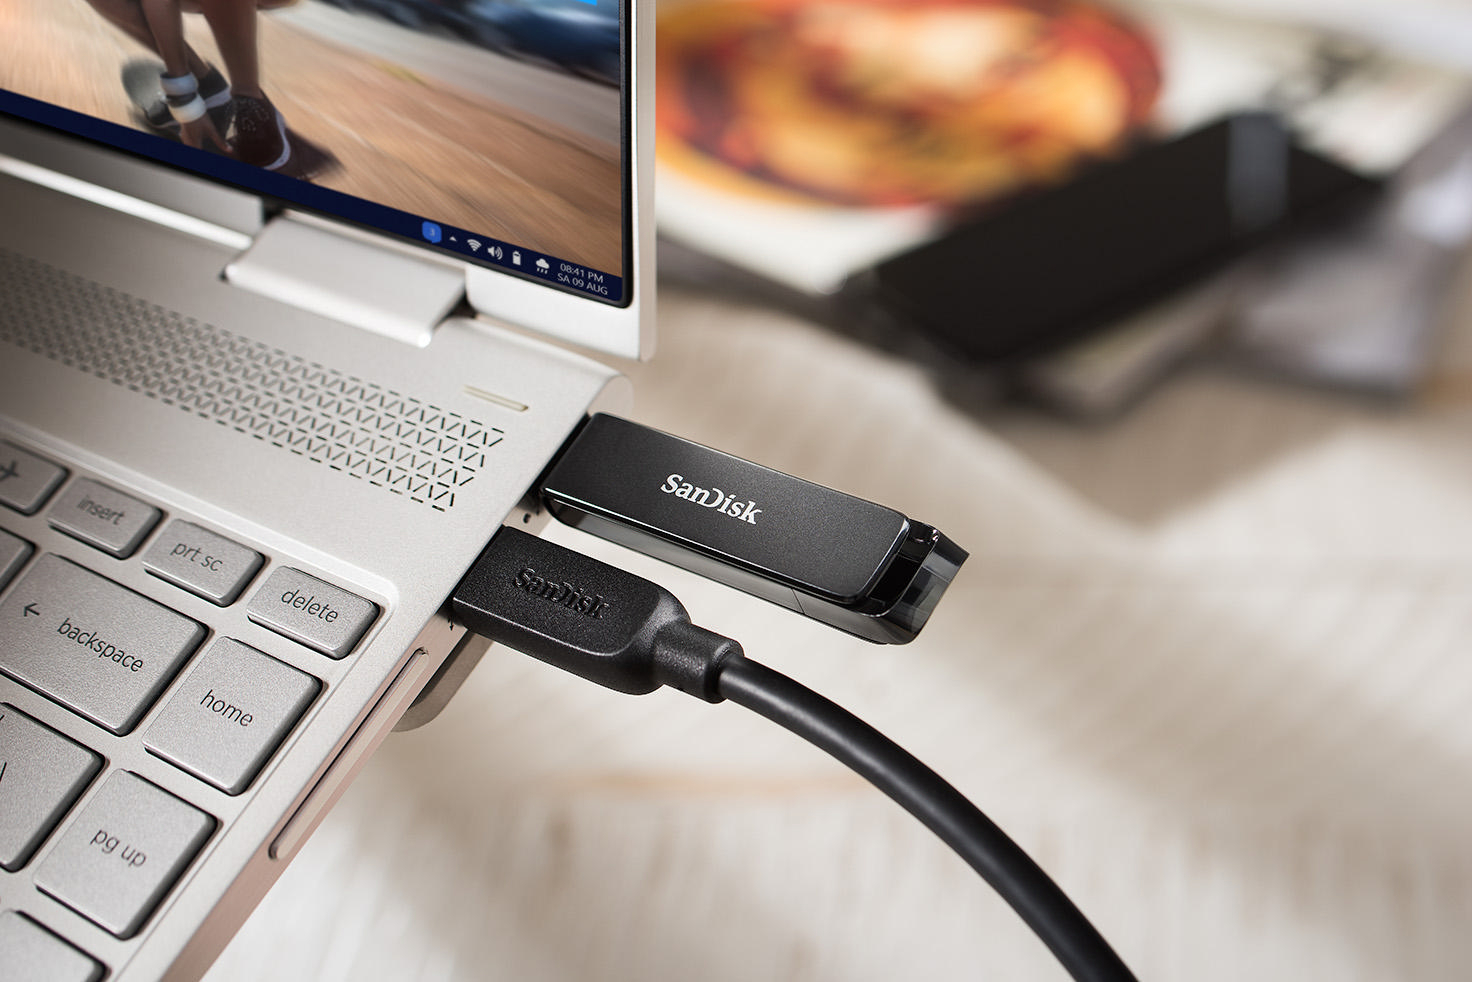 SANDISK 150 64 GB, Schwarz USB-Stick, Ultra® MB/s,